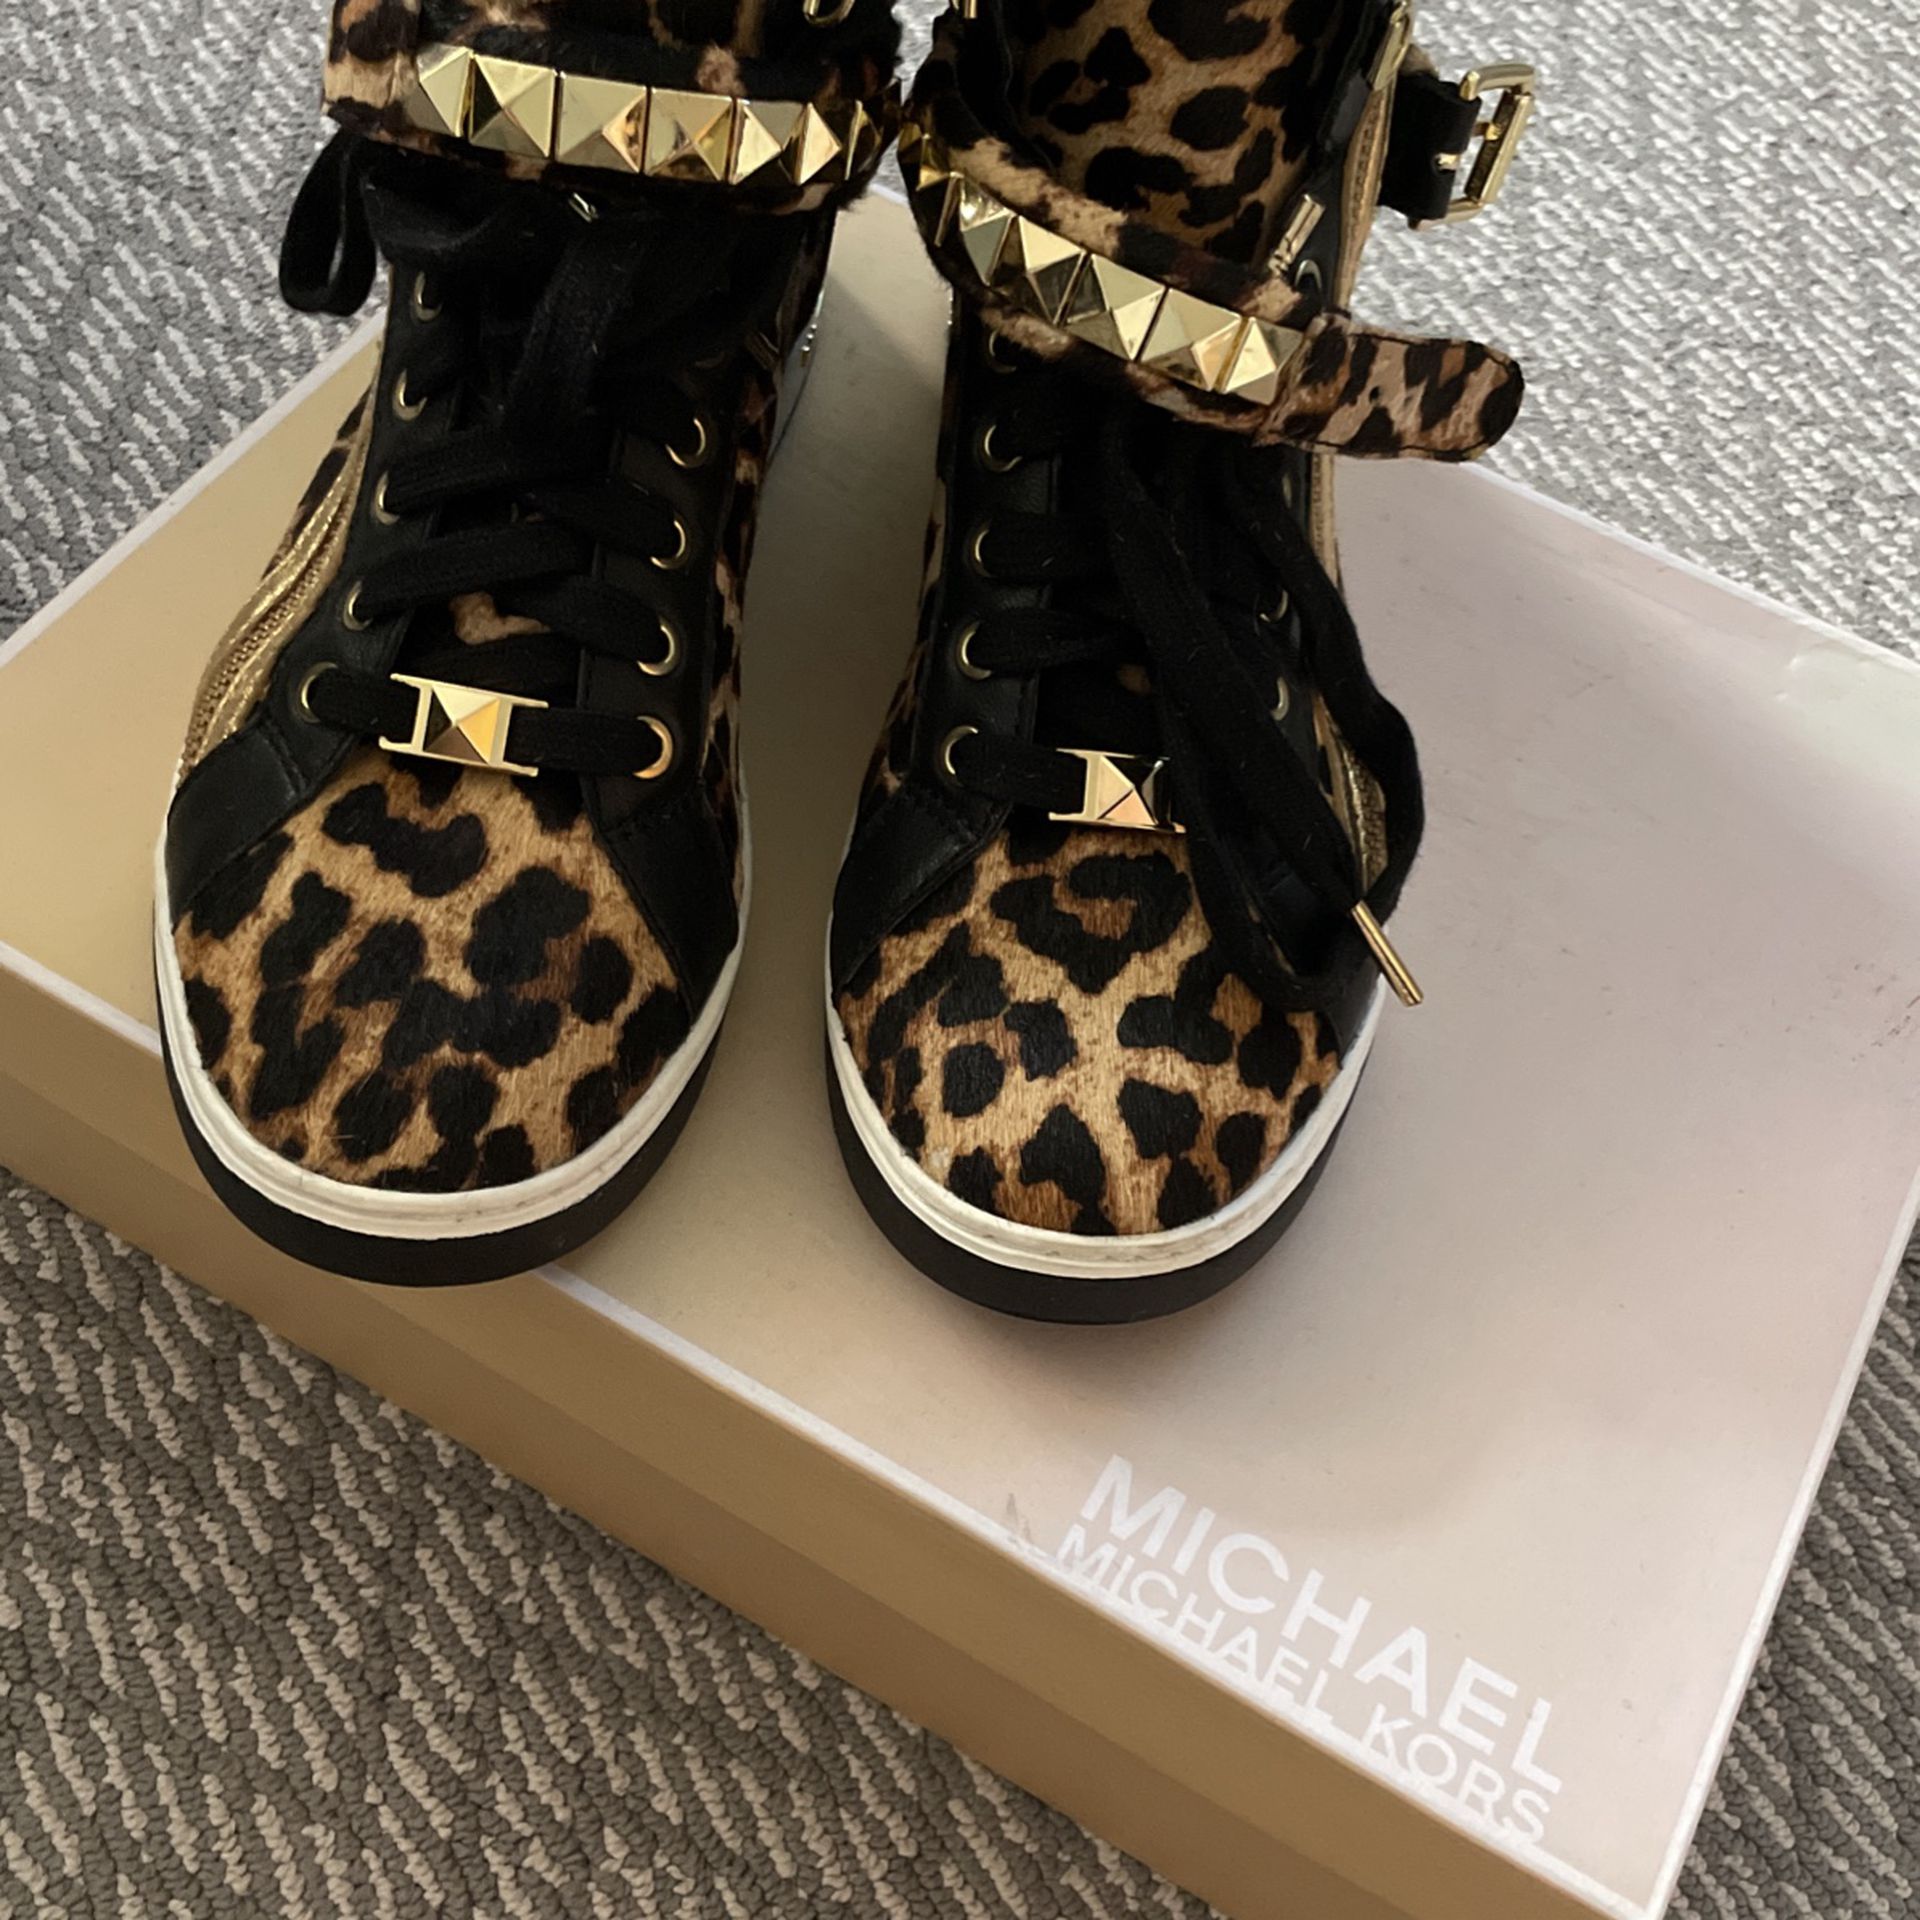 Michael Kors Sneakers 8.5 Woman’s 